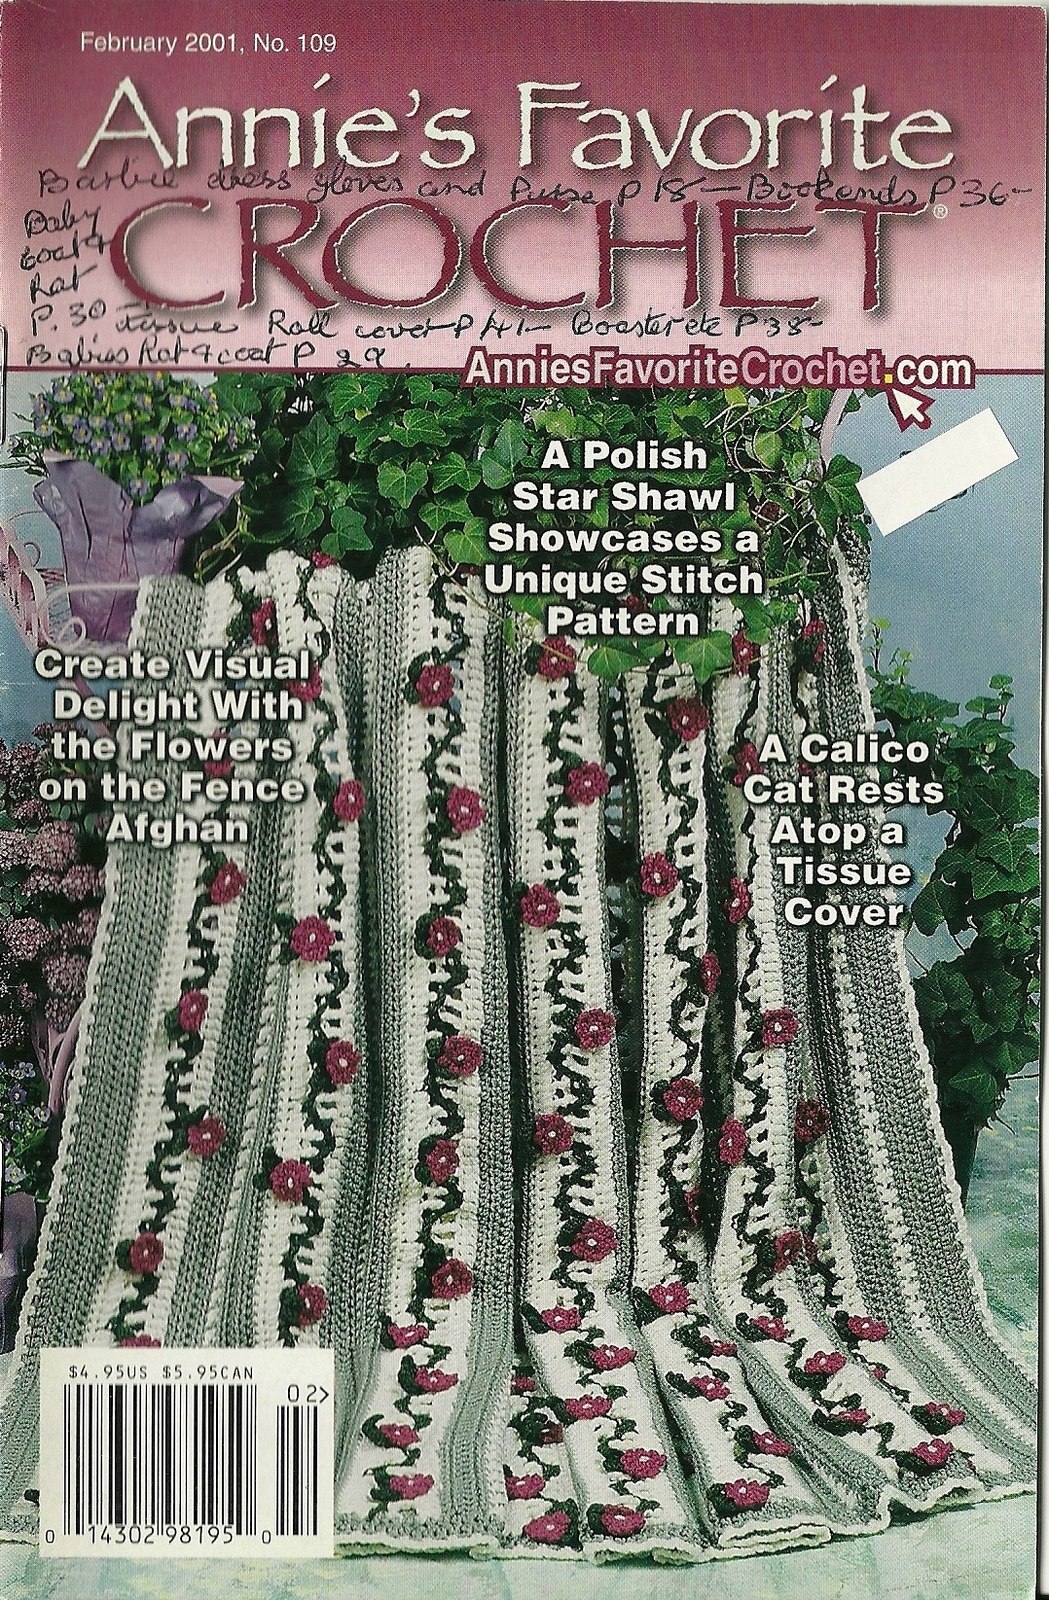 Annie's Favorite Crochet February 2001 No. 109 Pattern Book Magazine - $6.99